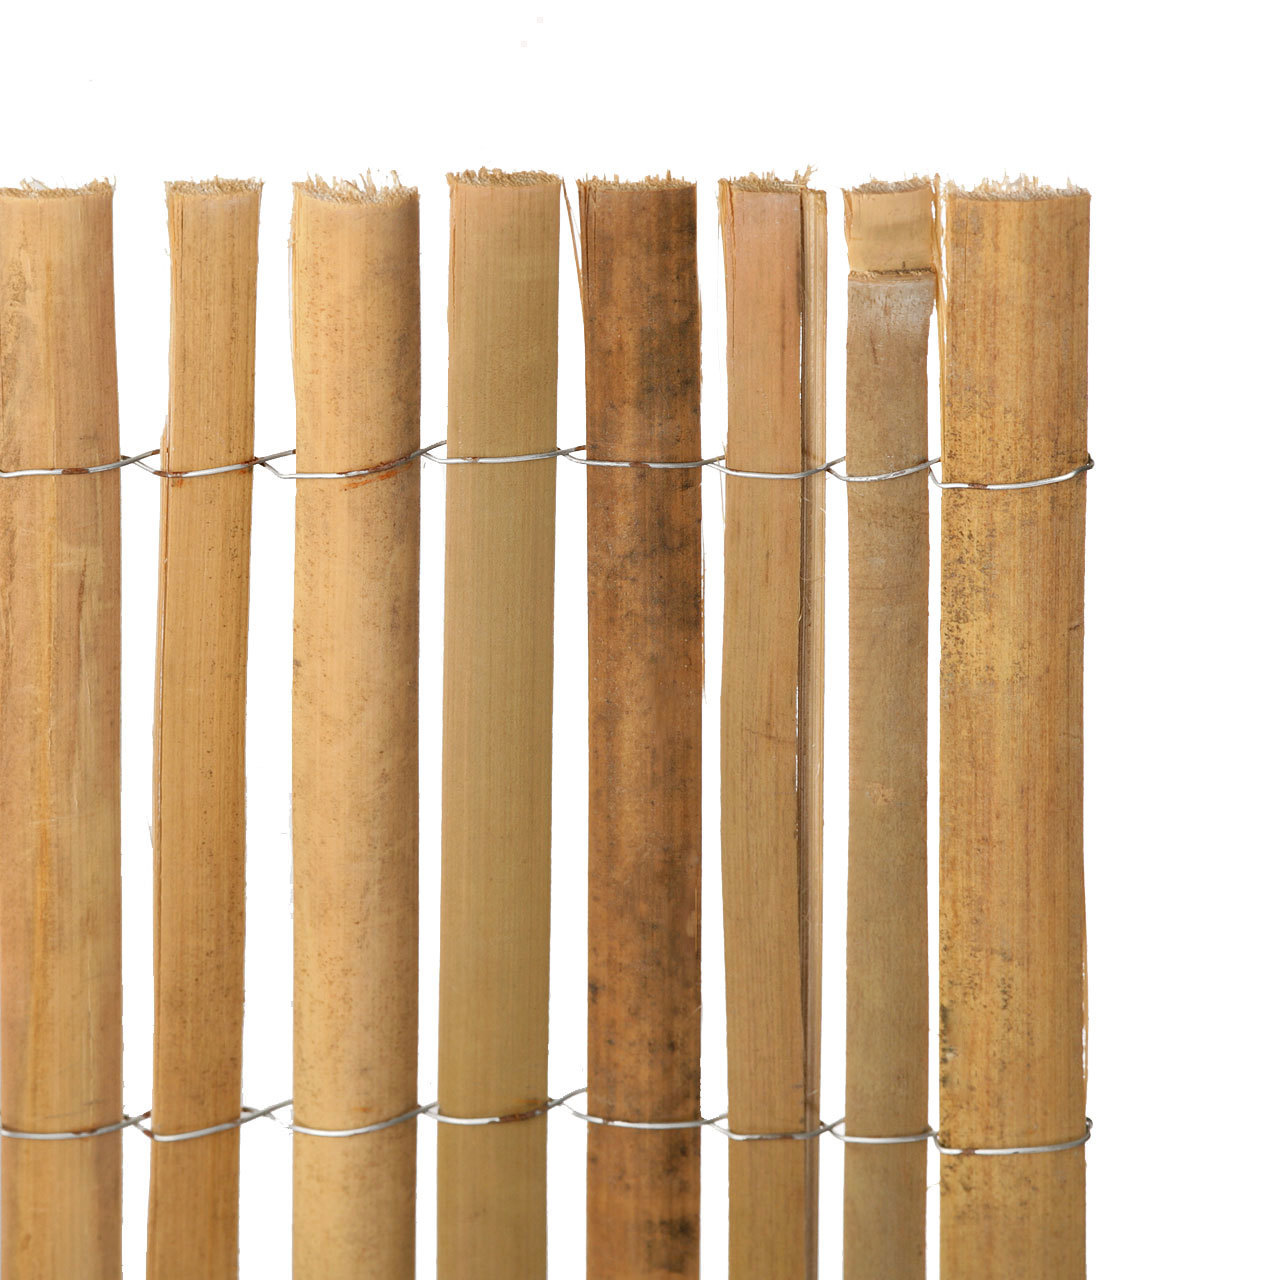 Omgeving Moedig Materialisme Videx balkonscherm Split bamboe 90x300cm